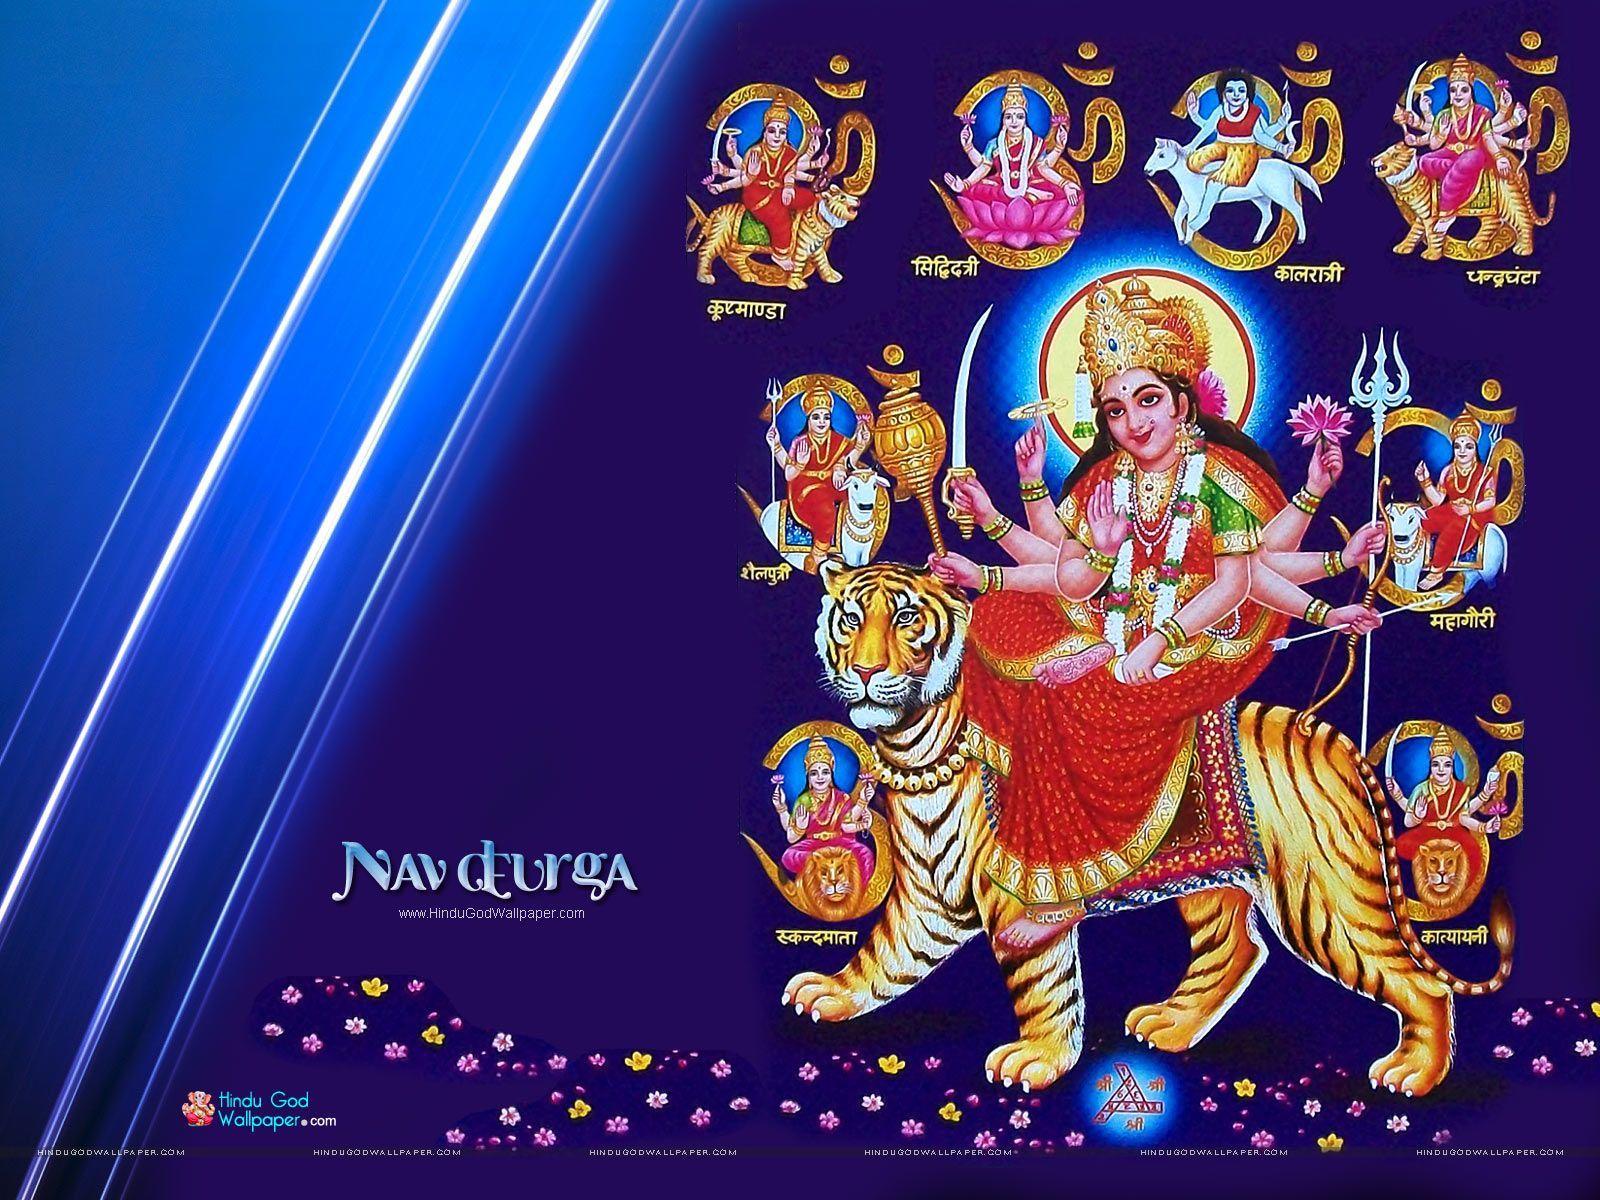 Maa Durga 9 Roop Wallpaper Free Download. h. Durga